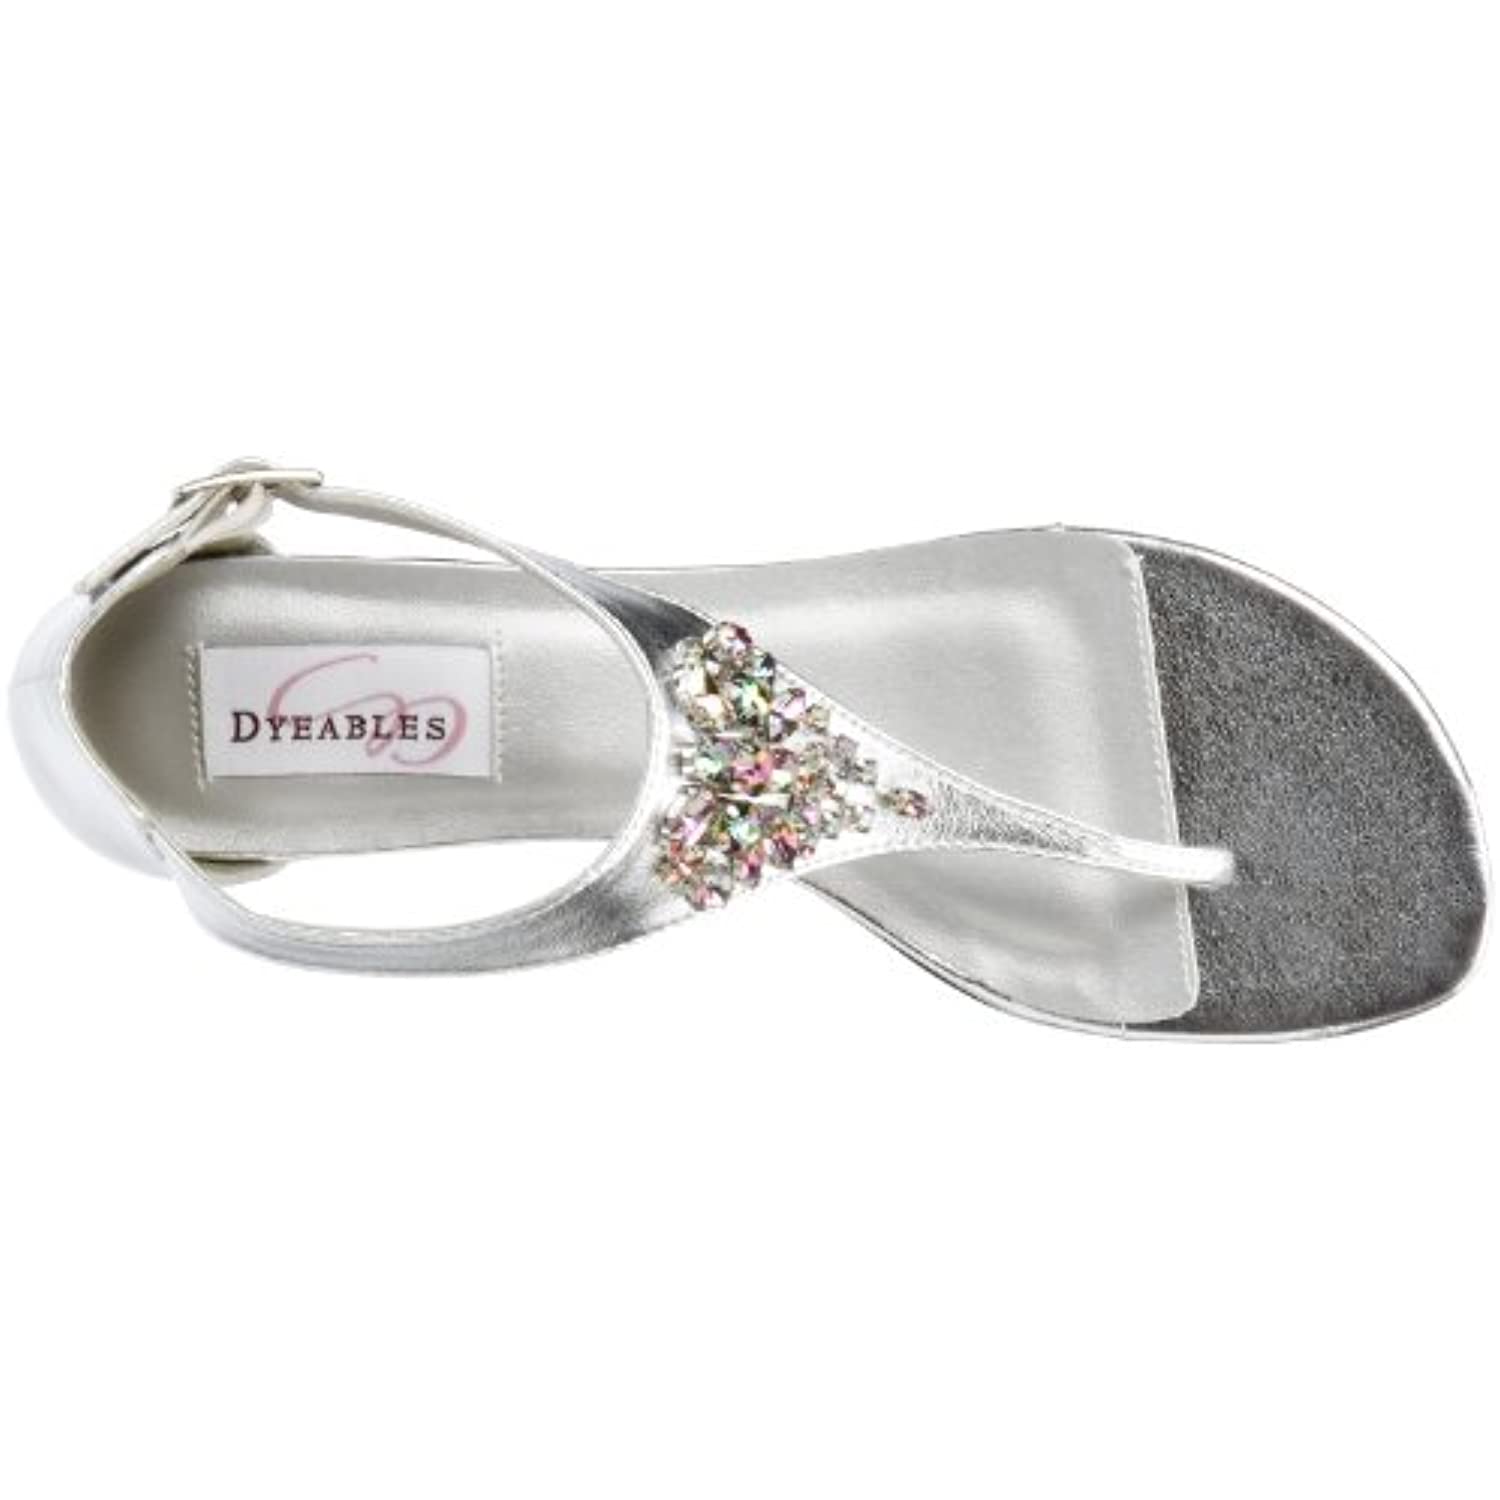 Dyeables Women's Cleo Sandal,Silver Metallic,5 B US